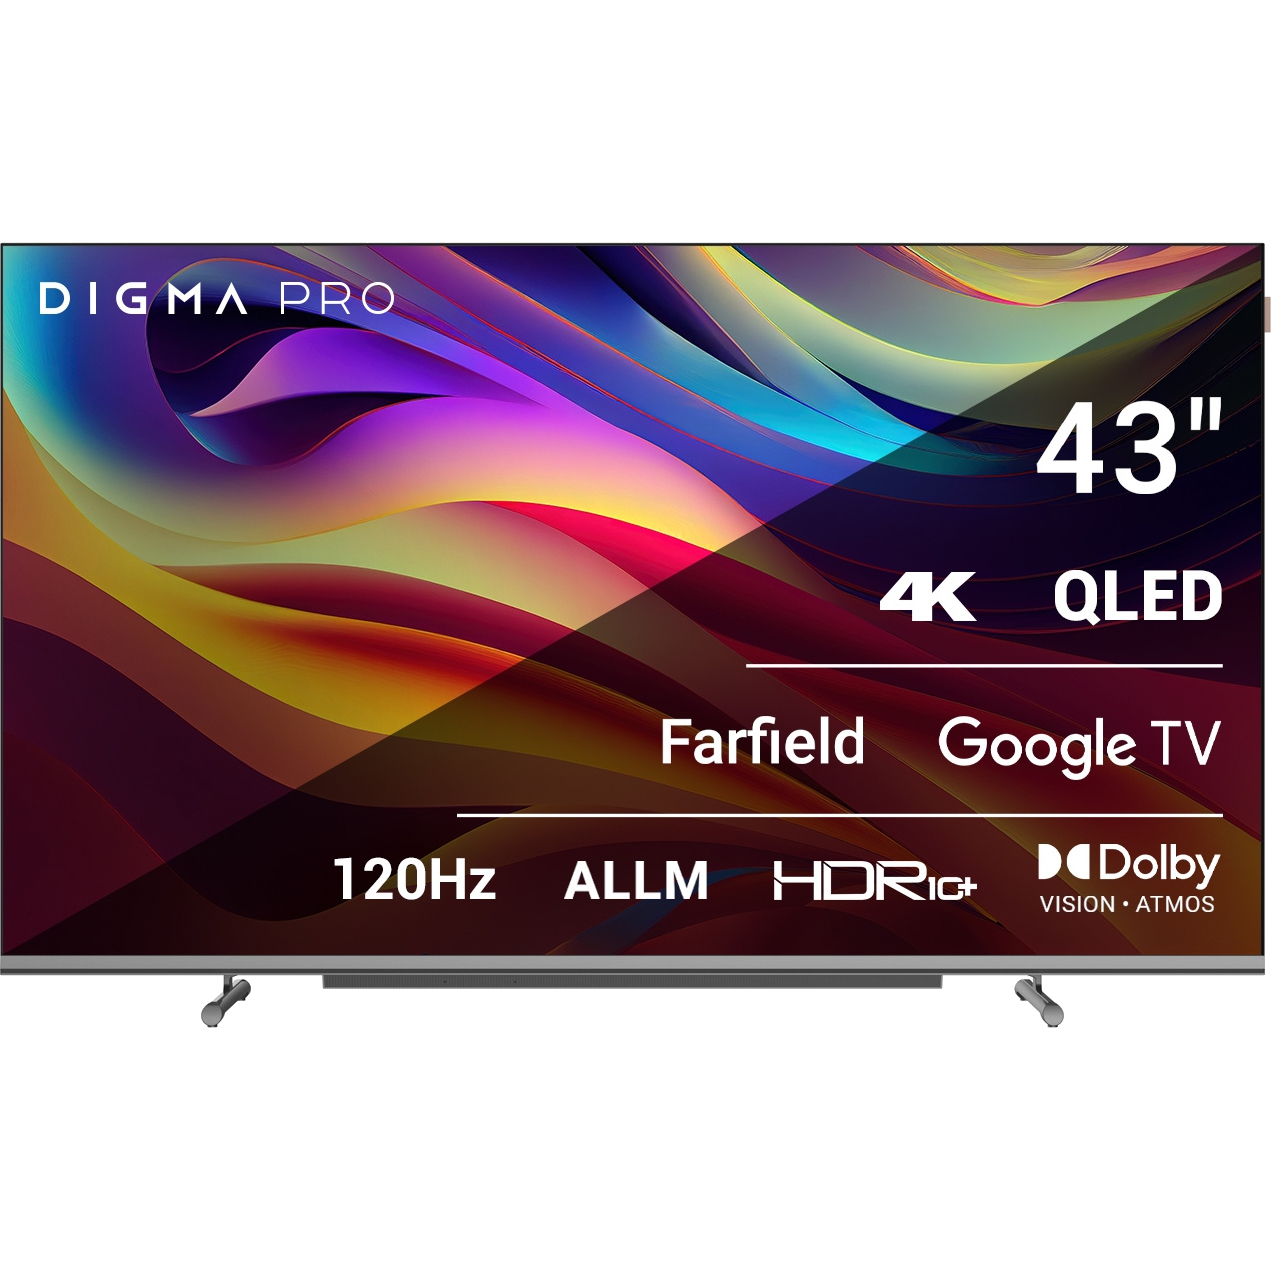 телевизор digma pro 43 43l Телевизор Digma Pro 43 43L